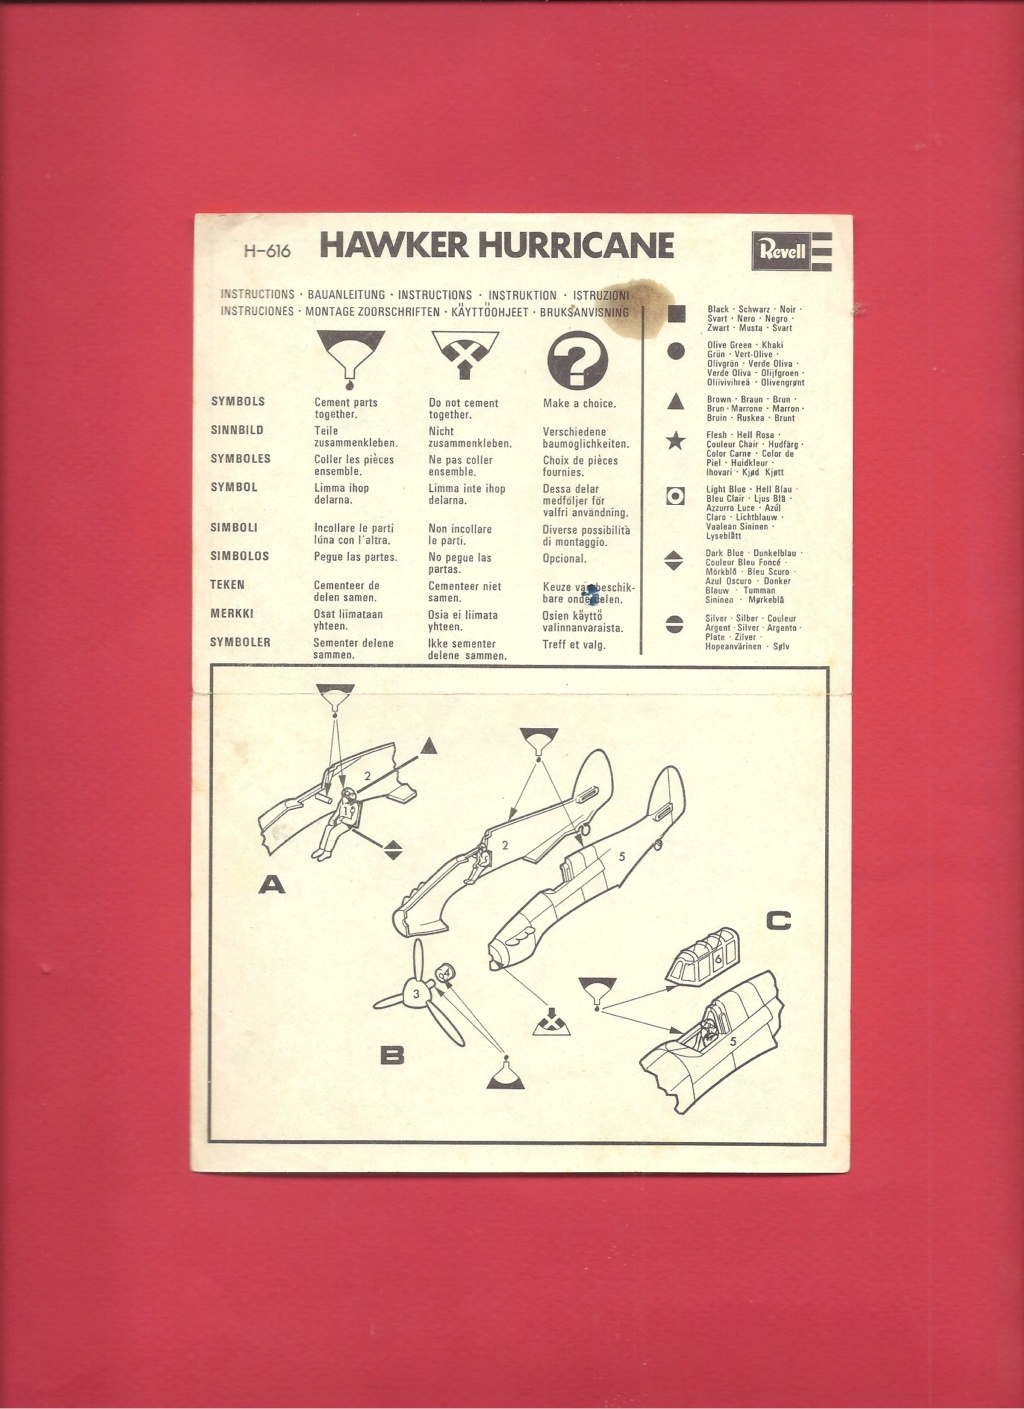 [REVELL] HAWKER HURRICANE 1/72ème Réf H 616 Notice Reve2782